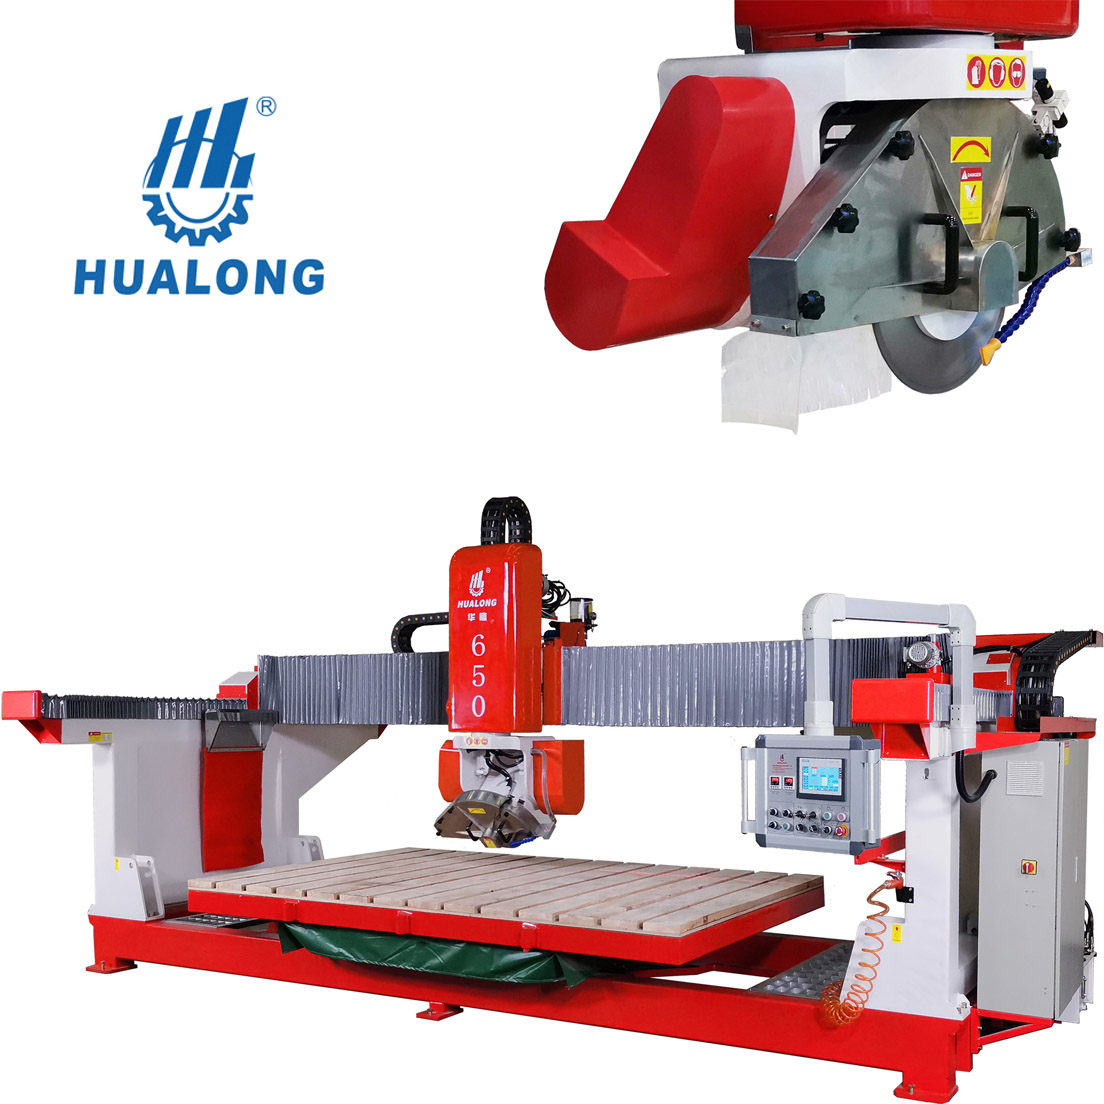 Hualong Stone Cutting Machinery for sale HLSQ-650 Bridge Saw laser Cutting Machine with Horizontal Blade machine